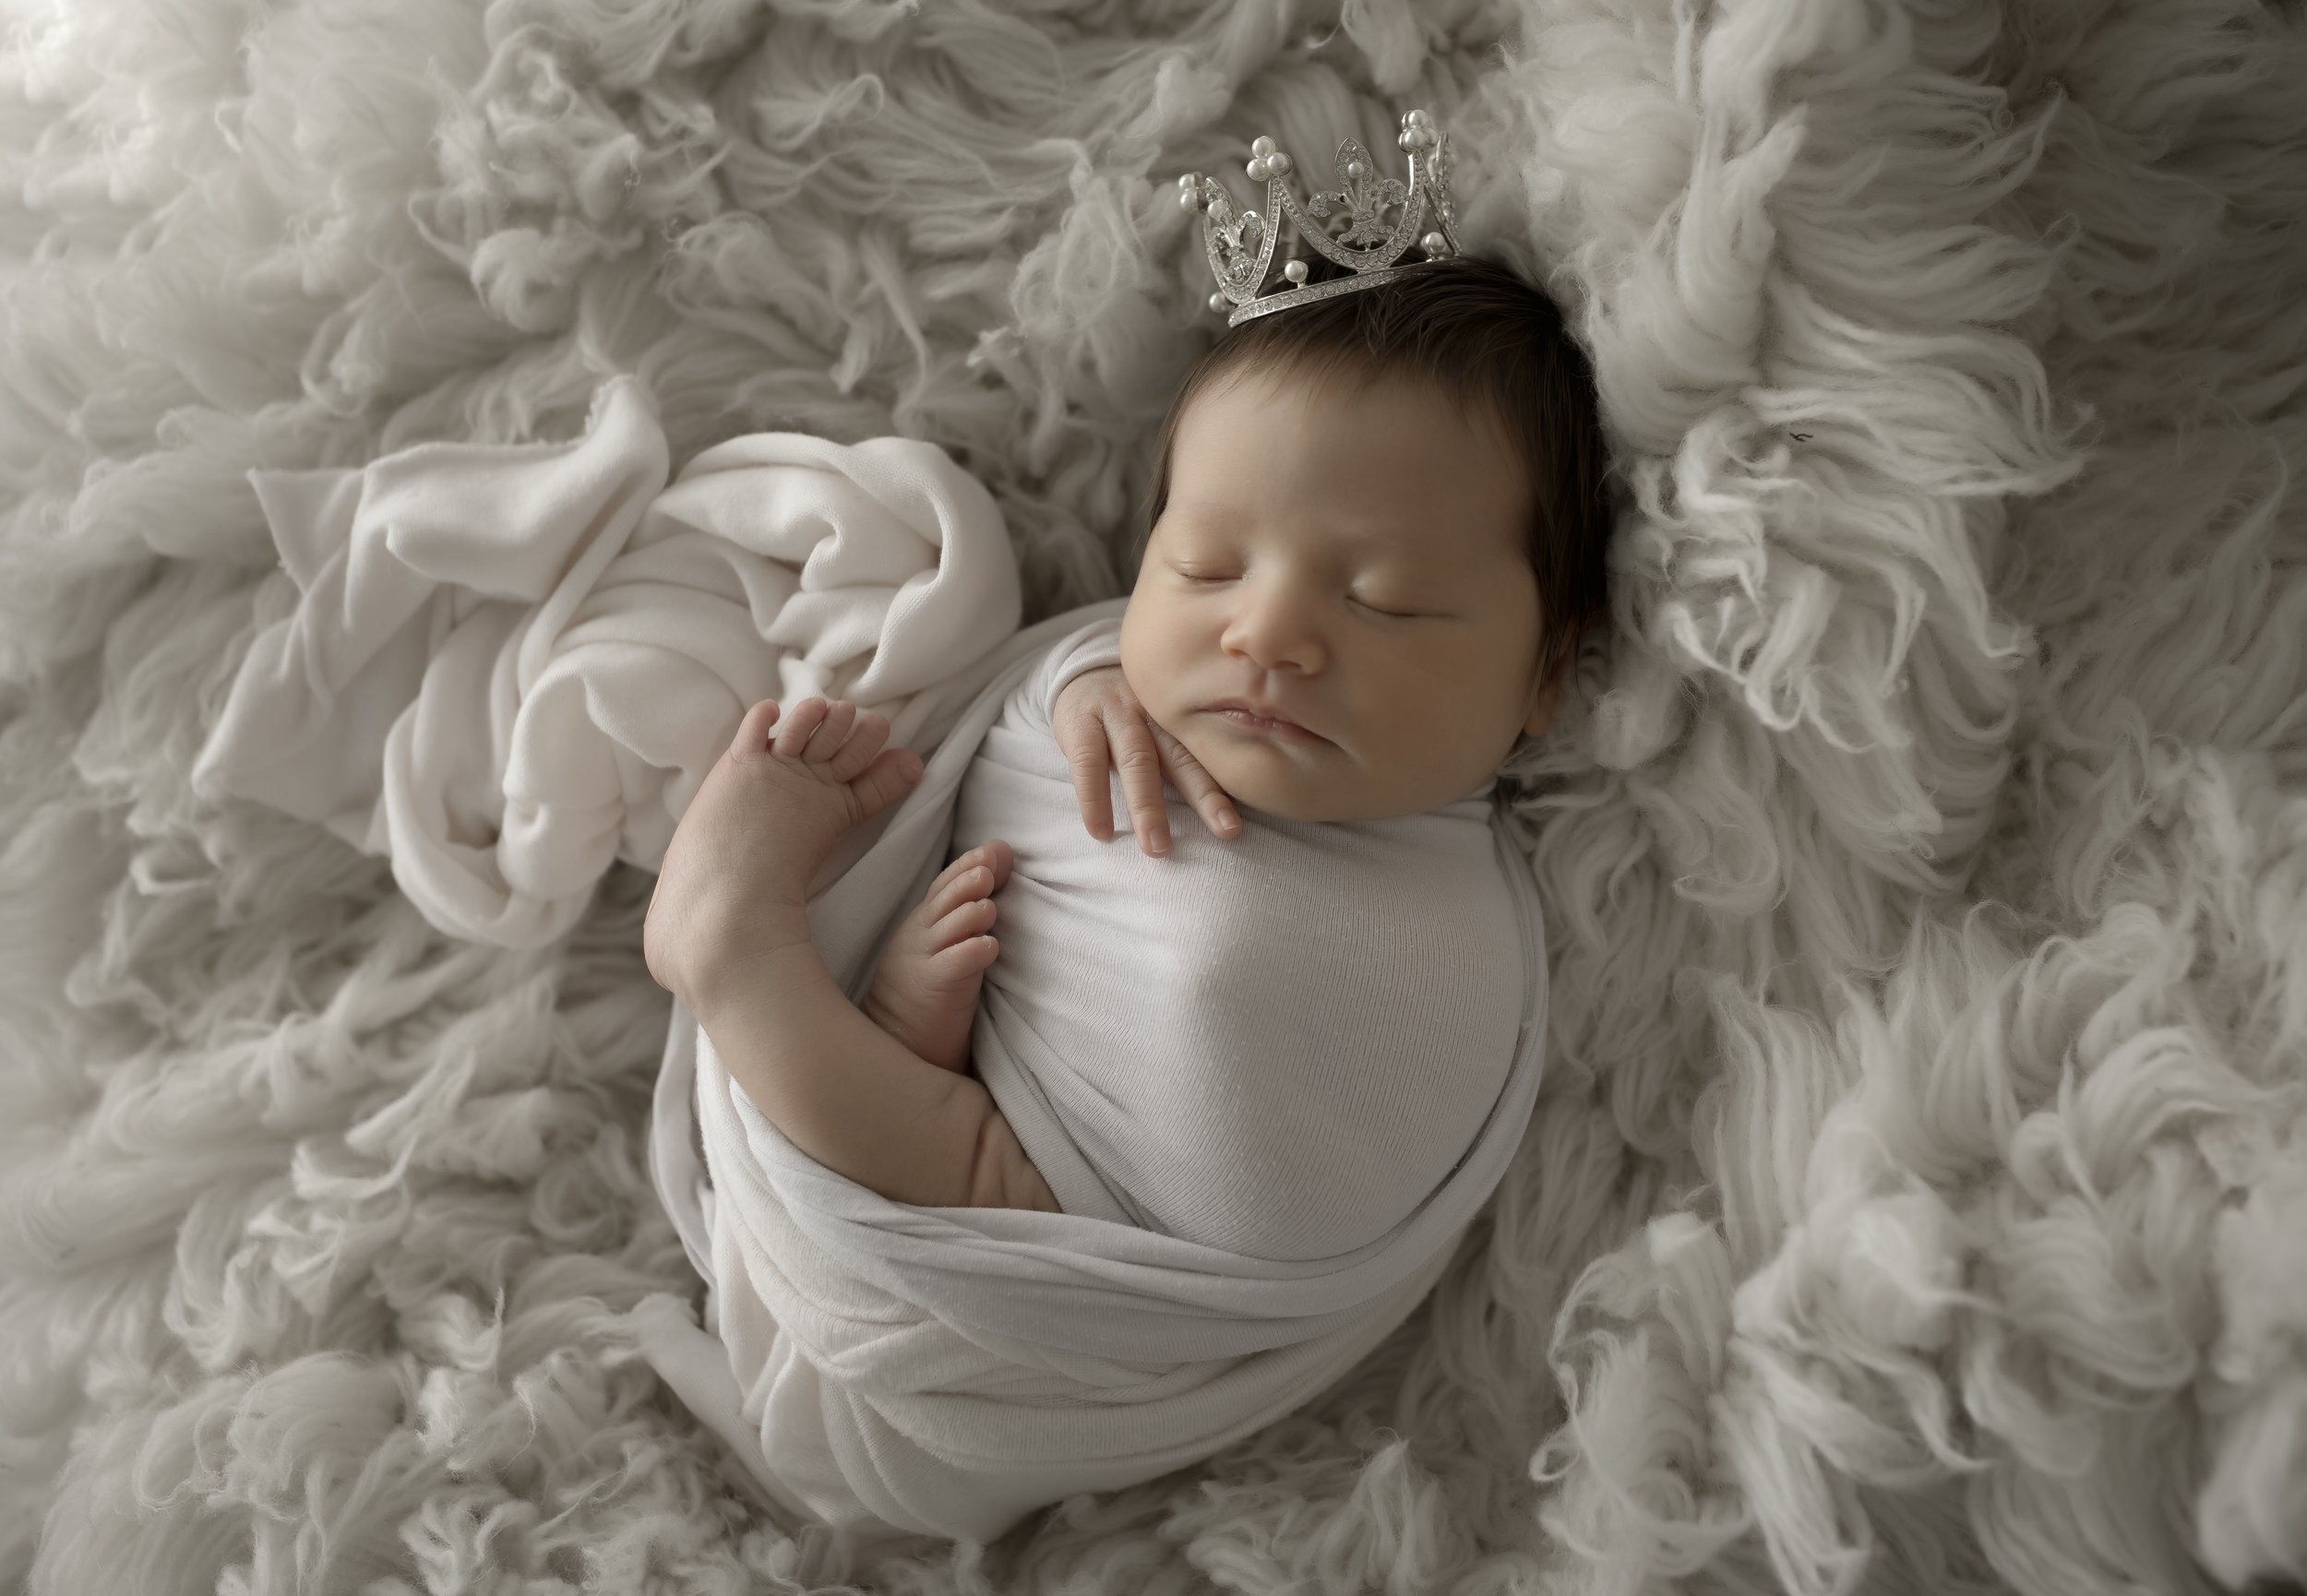 Newborn baby with crown